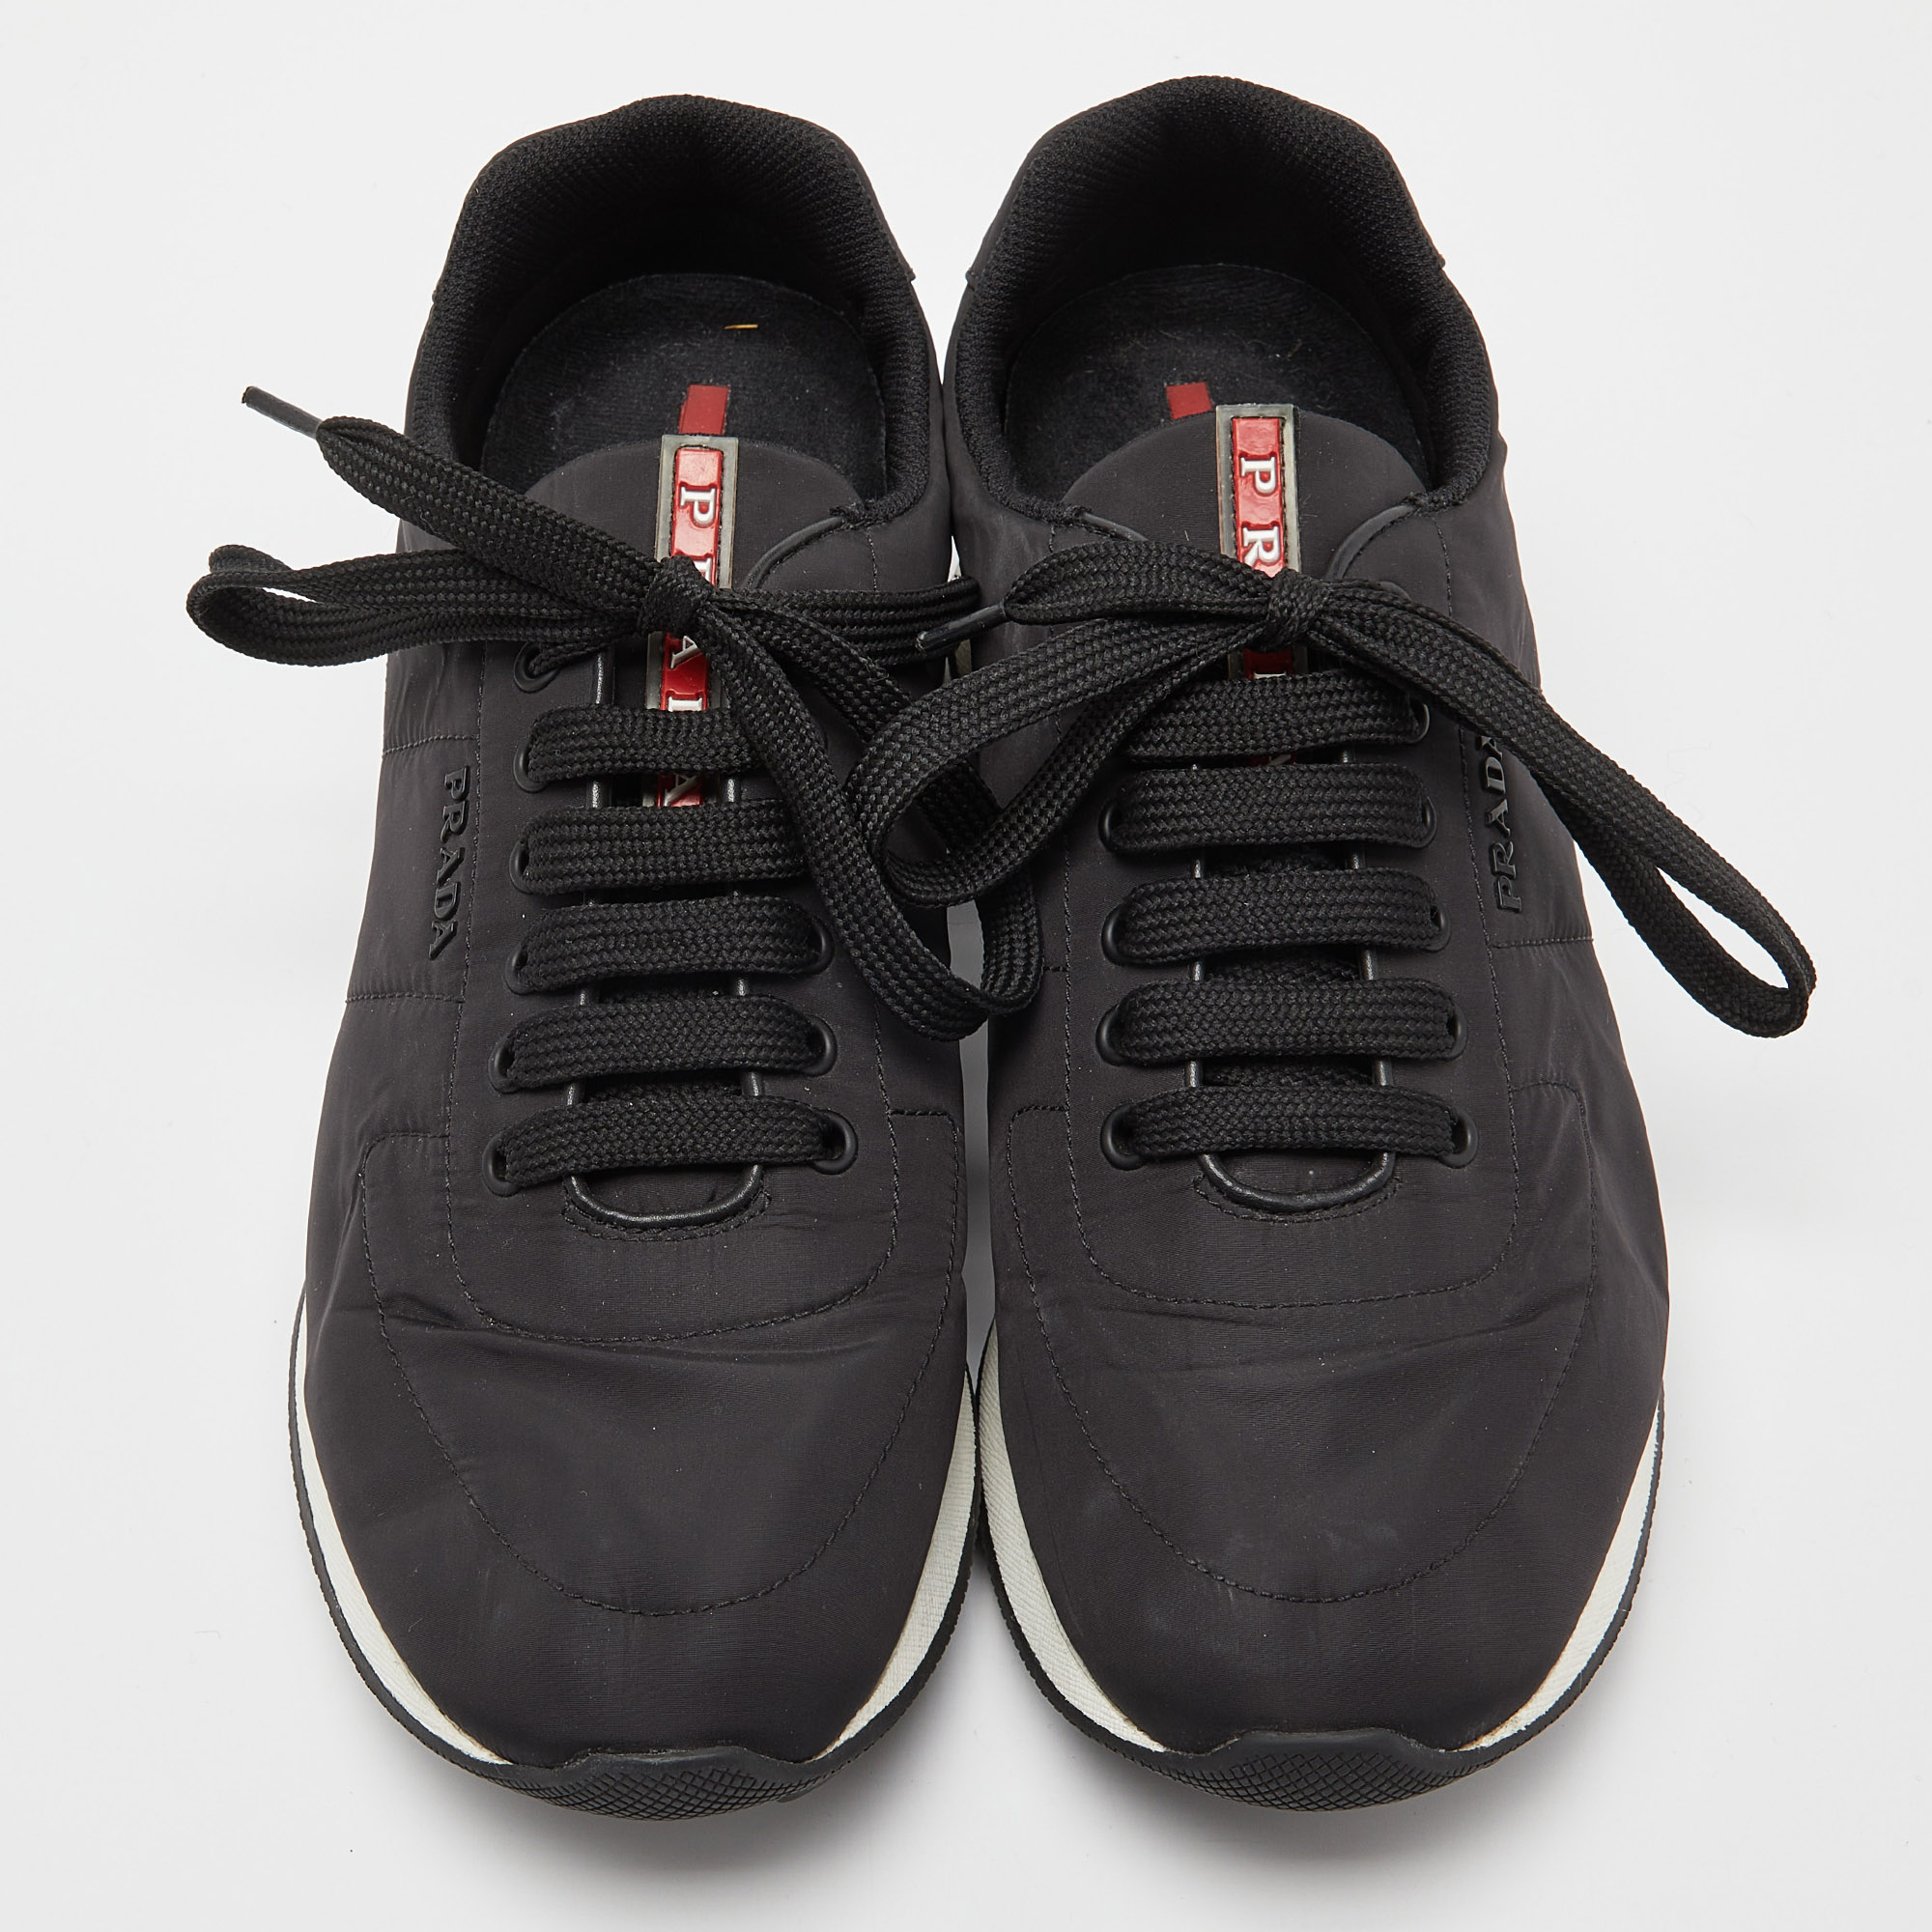 Prada Sport Black Nylon Low-Top Sneakers Size 41.5